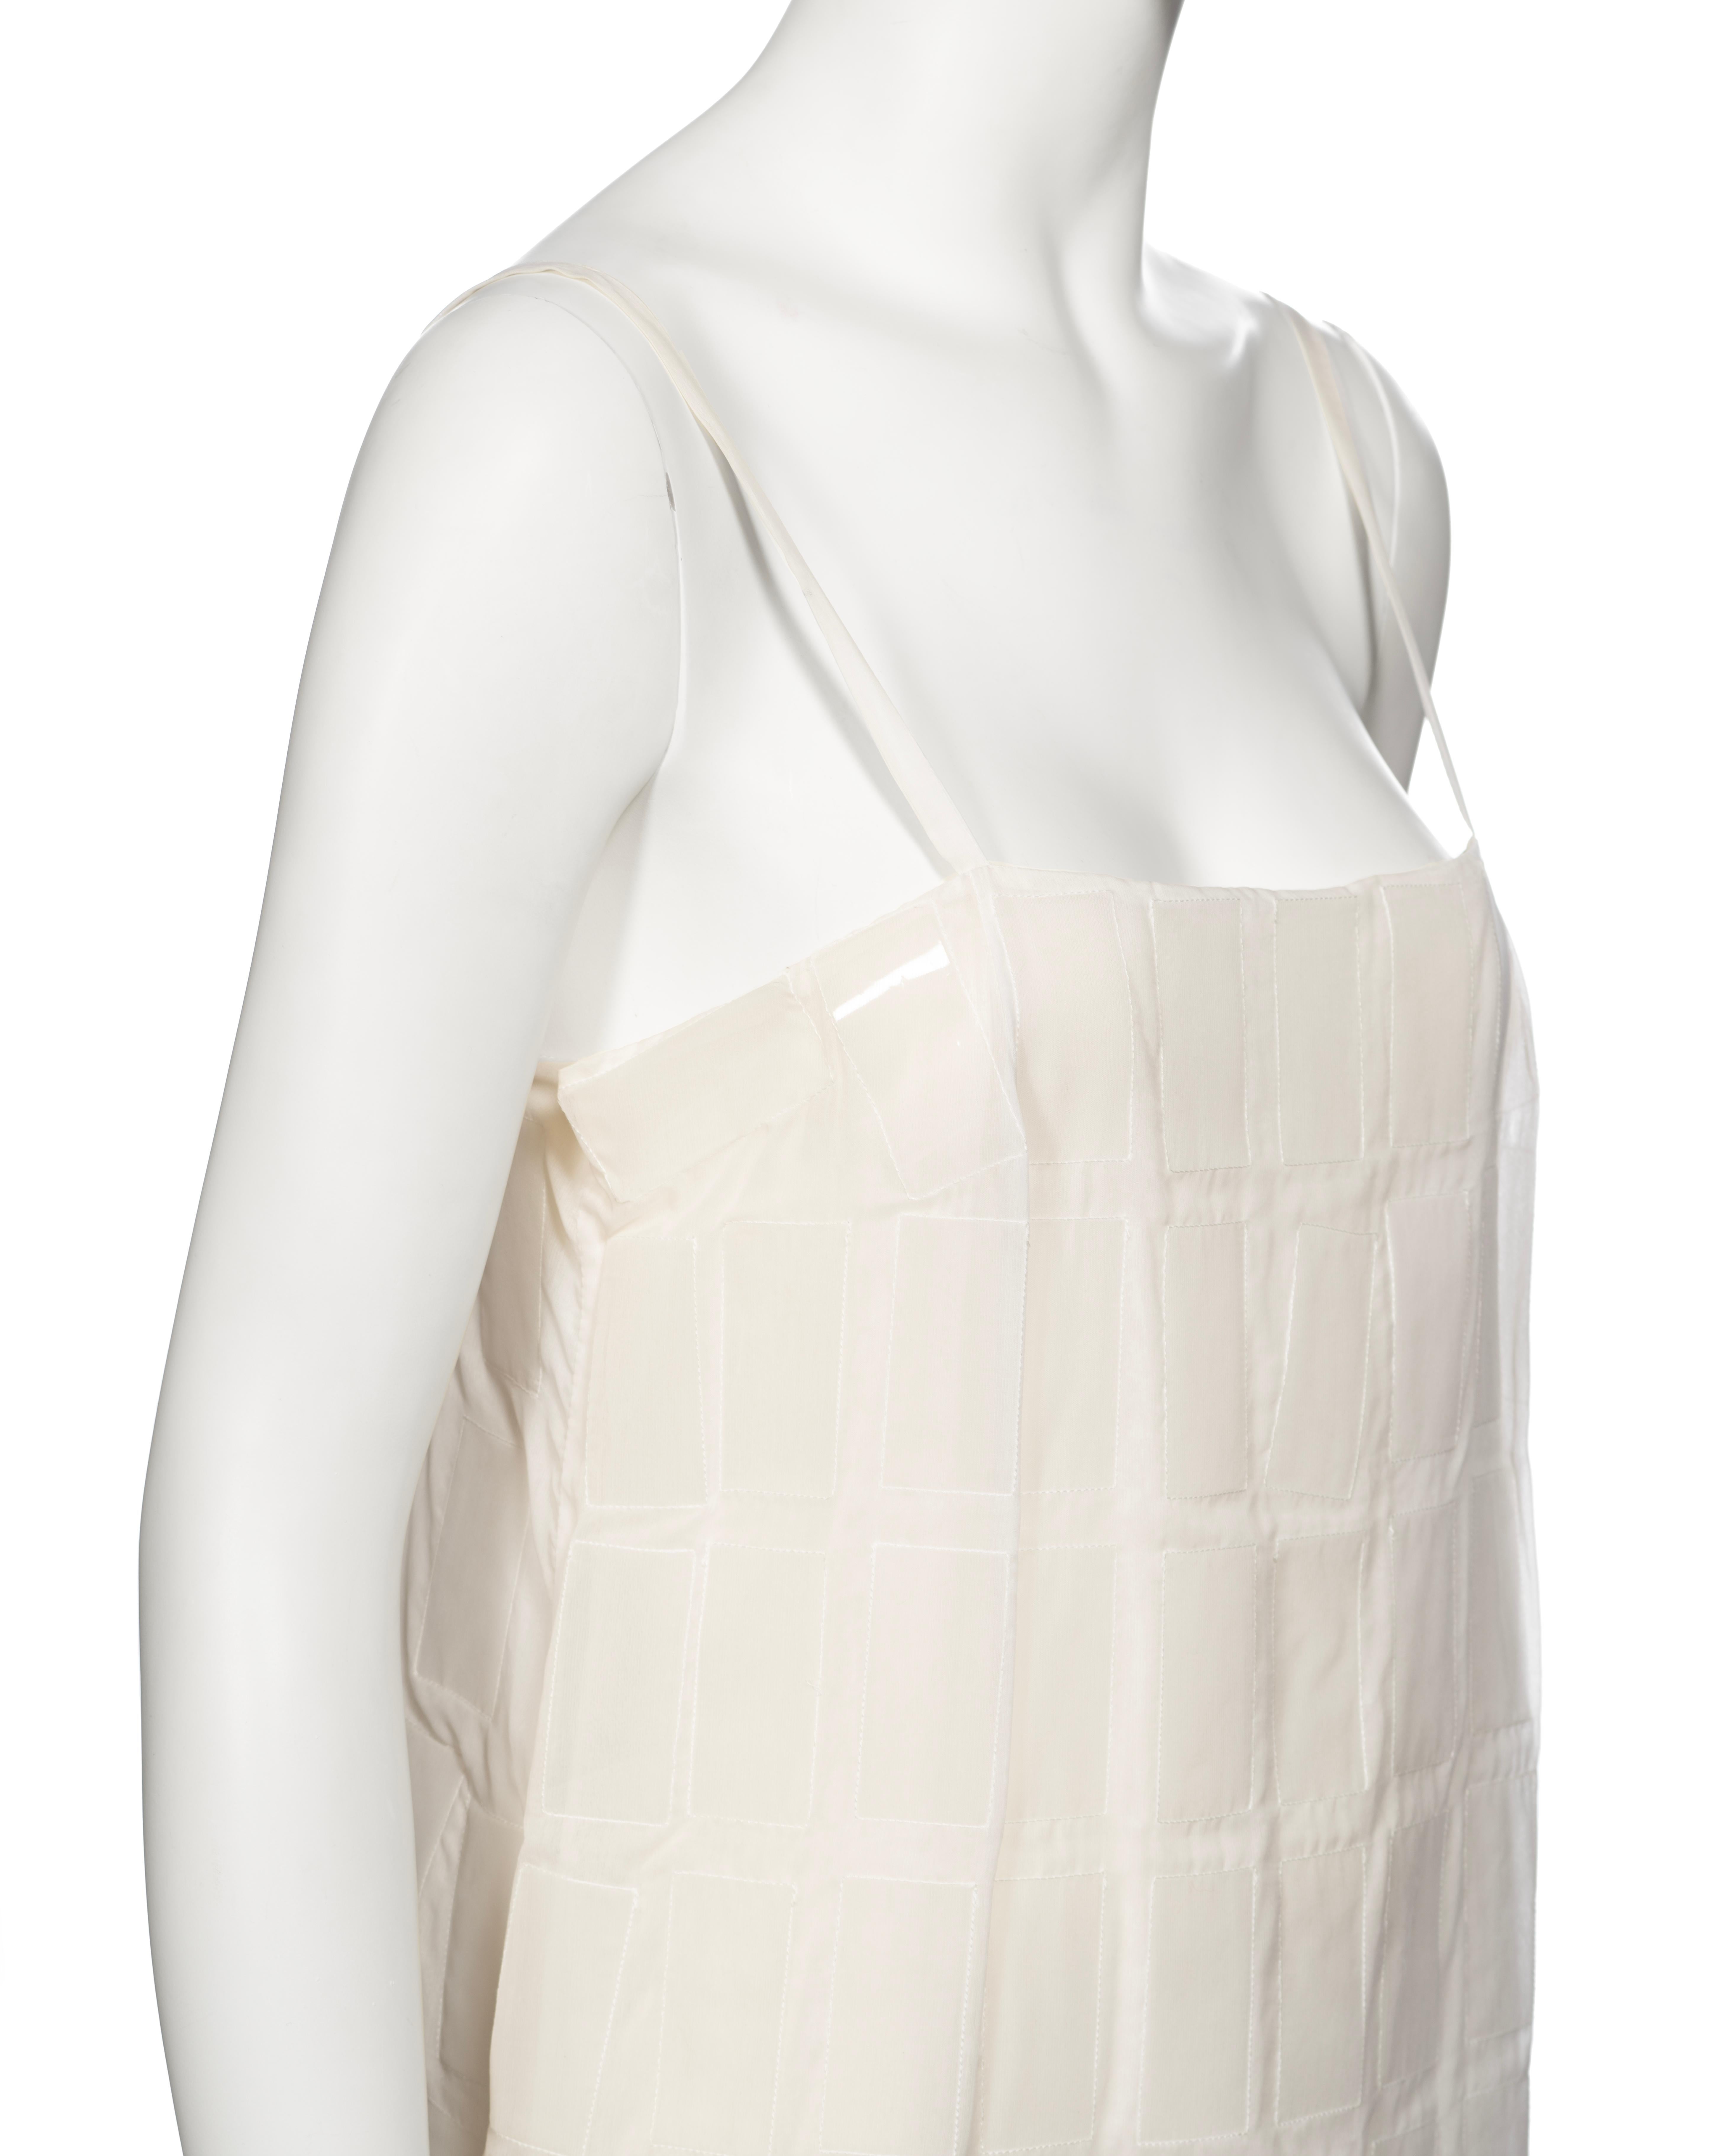 Prada by Miuccia Prada White Silk and Plastic Tile Camisole Top, fw 1998 For Sale 4